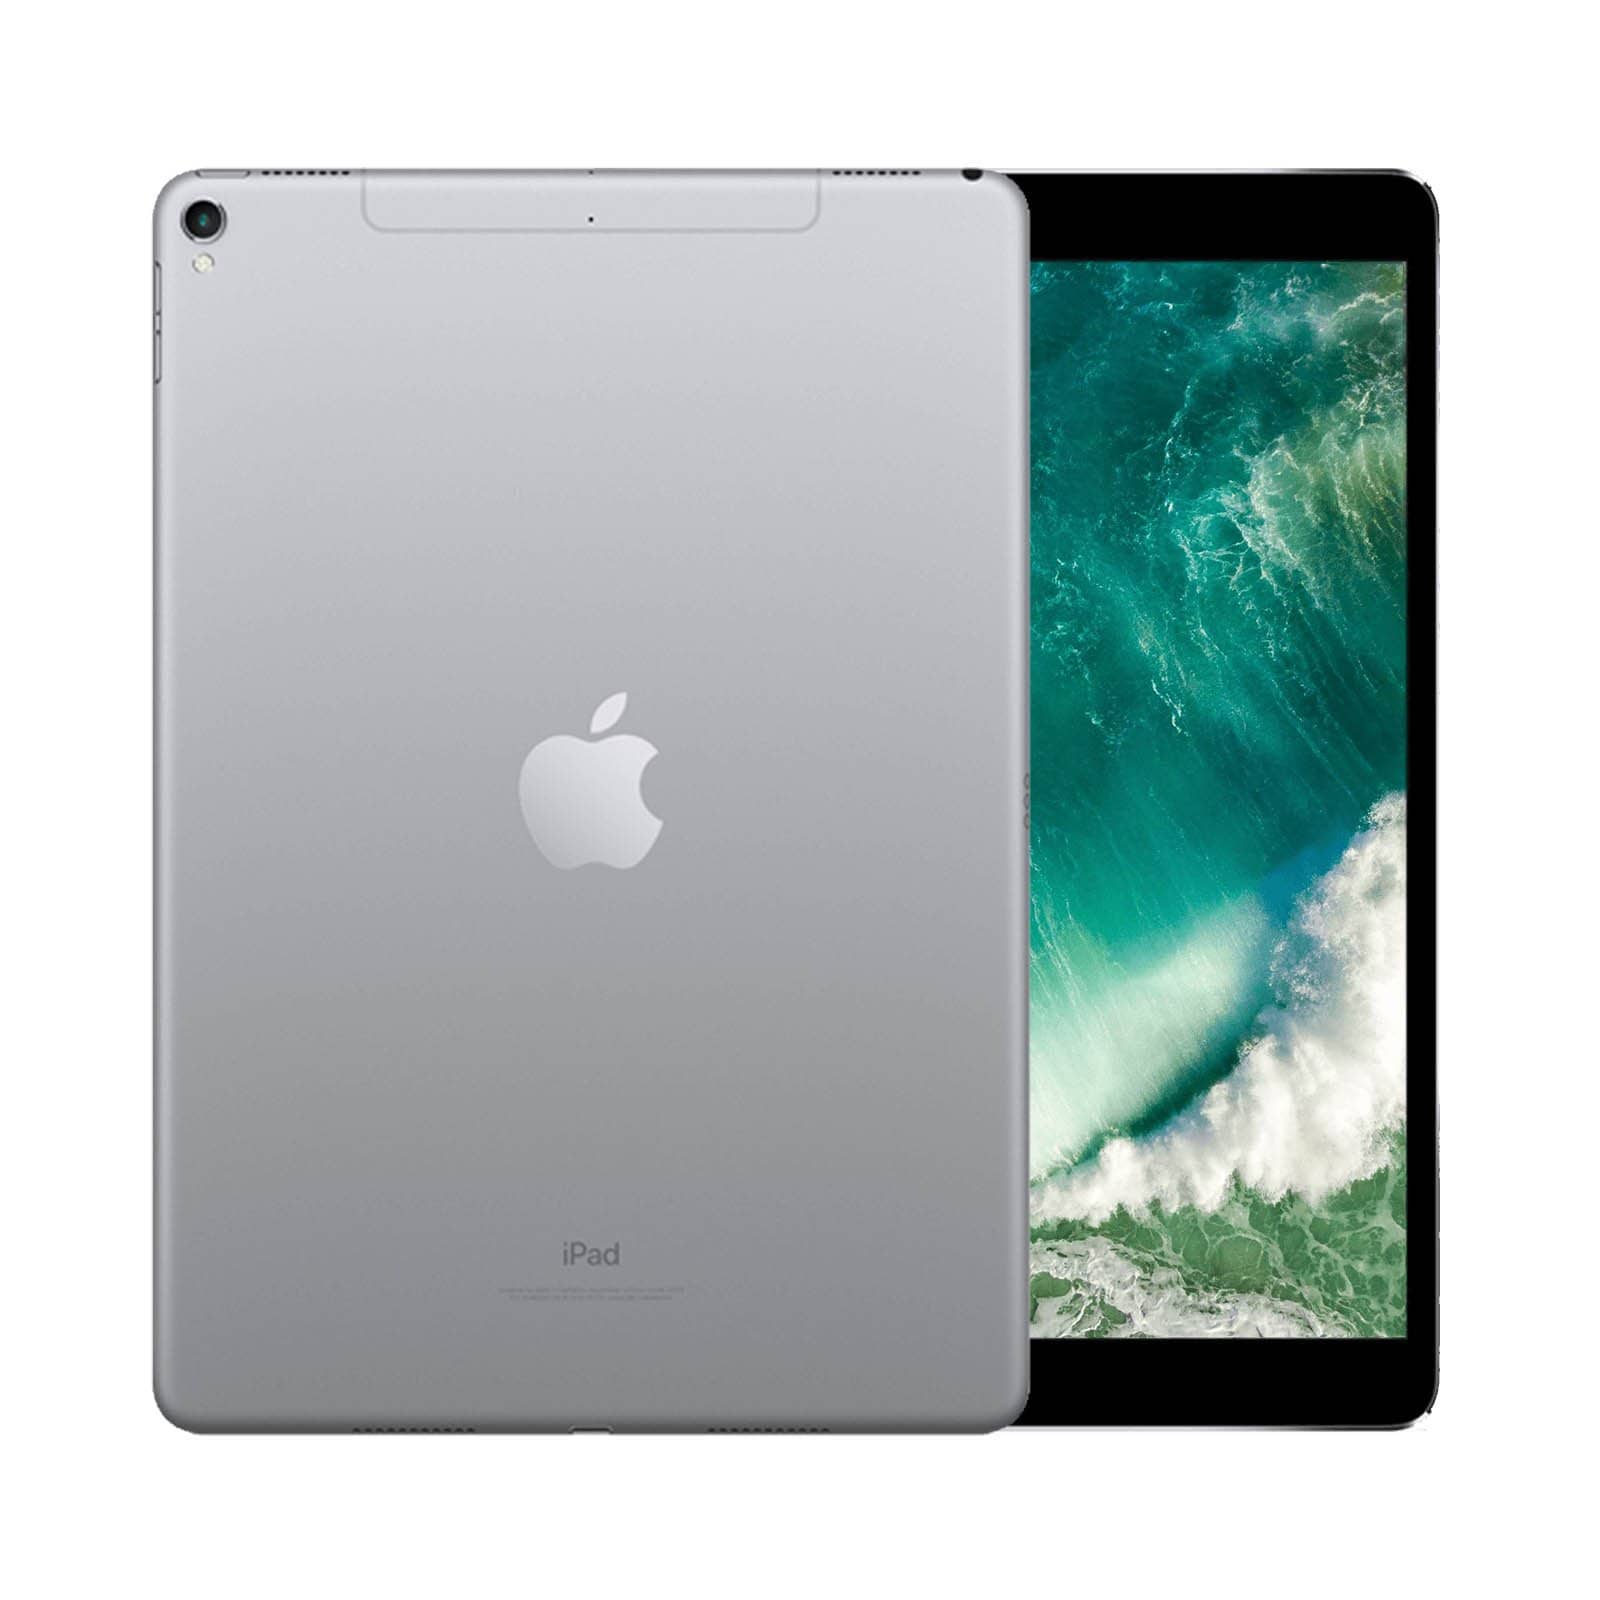 iPad Pro 10.5 Inch 256GB Space Grey Pristine - Unlocked 256GB Space Grey Pristine